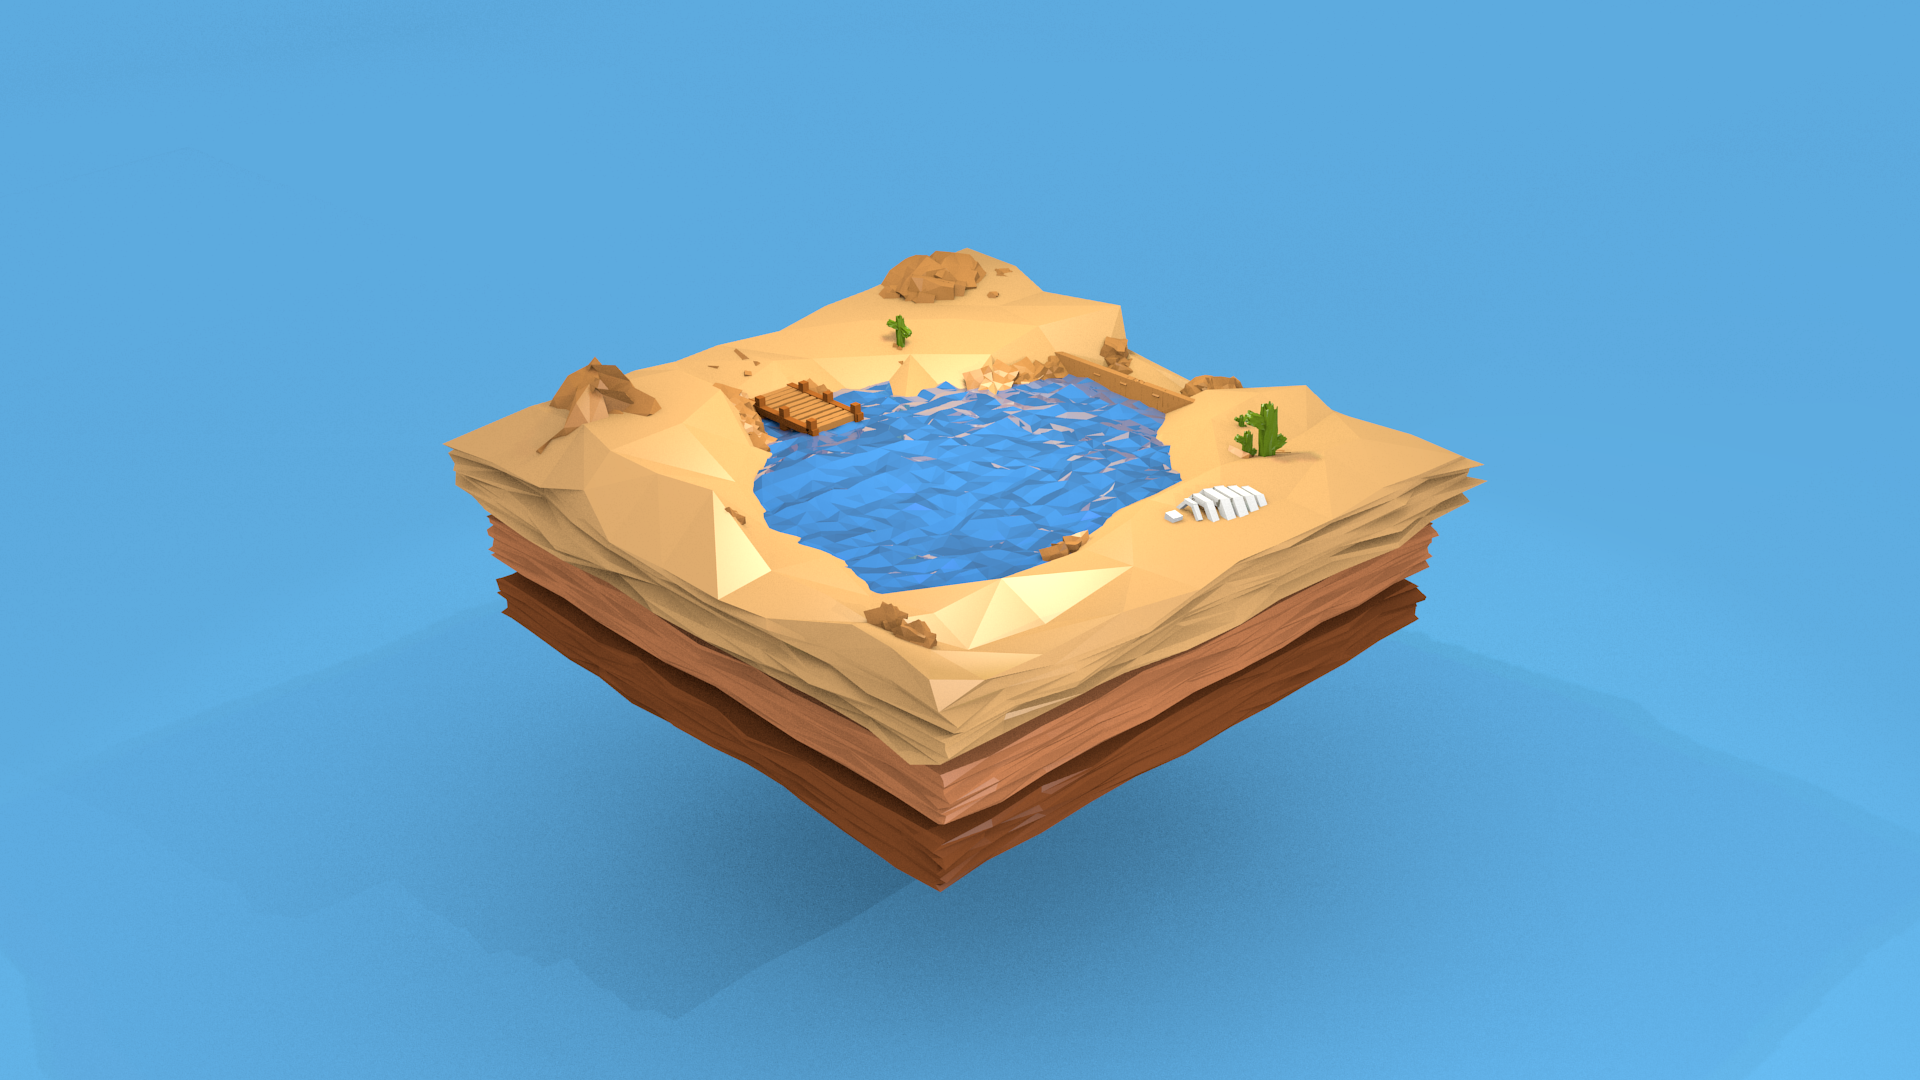 General 1920x1080 floating island oasis skeleton water stones simple background blue background digital art CGI